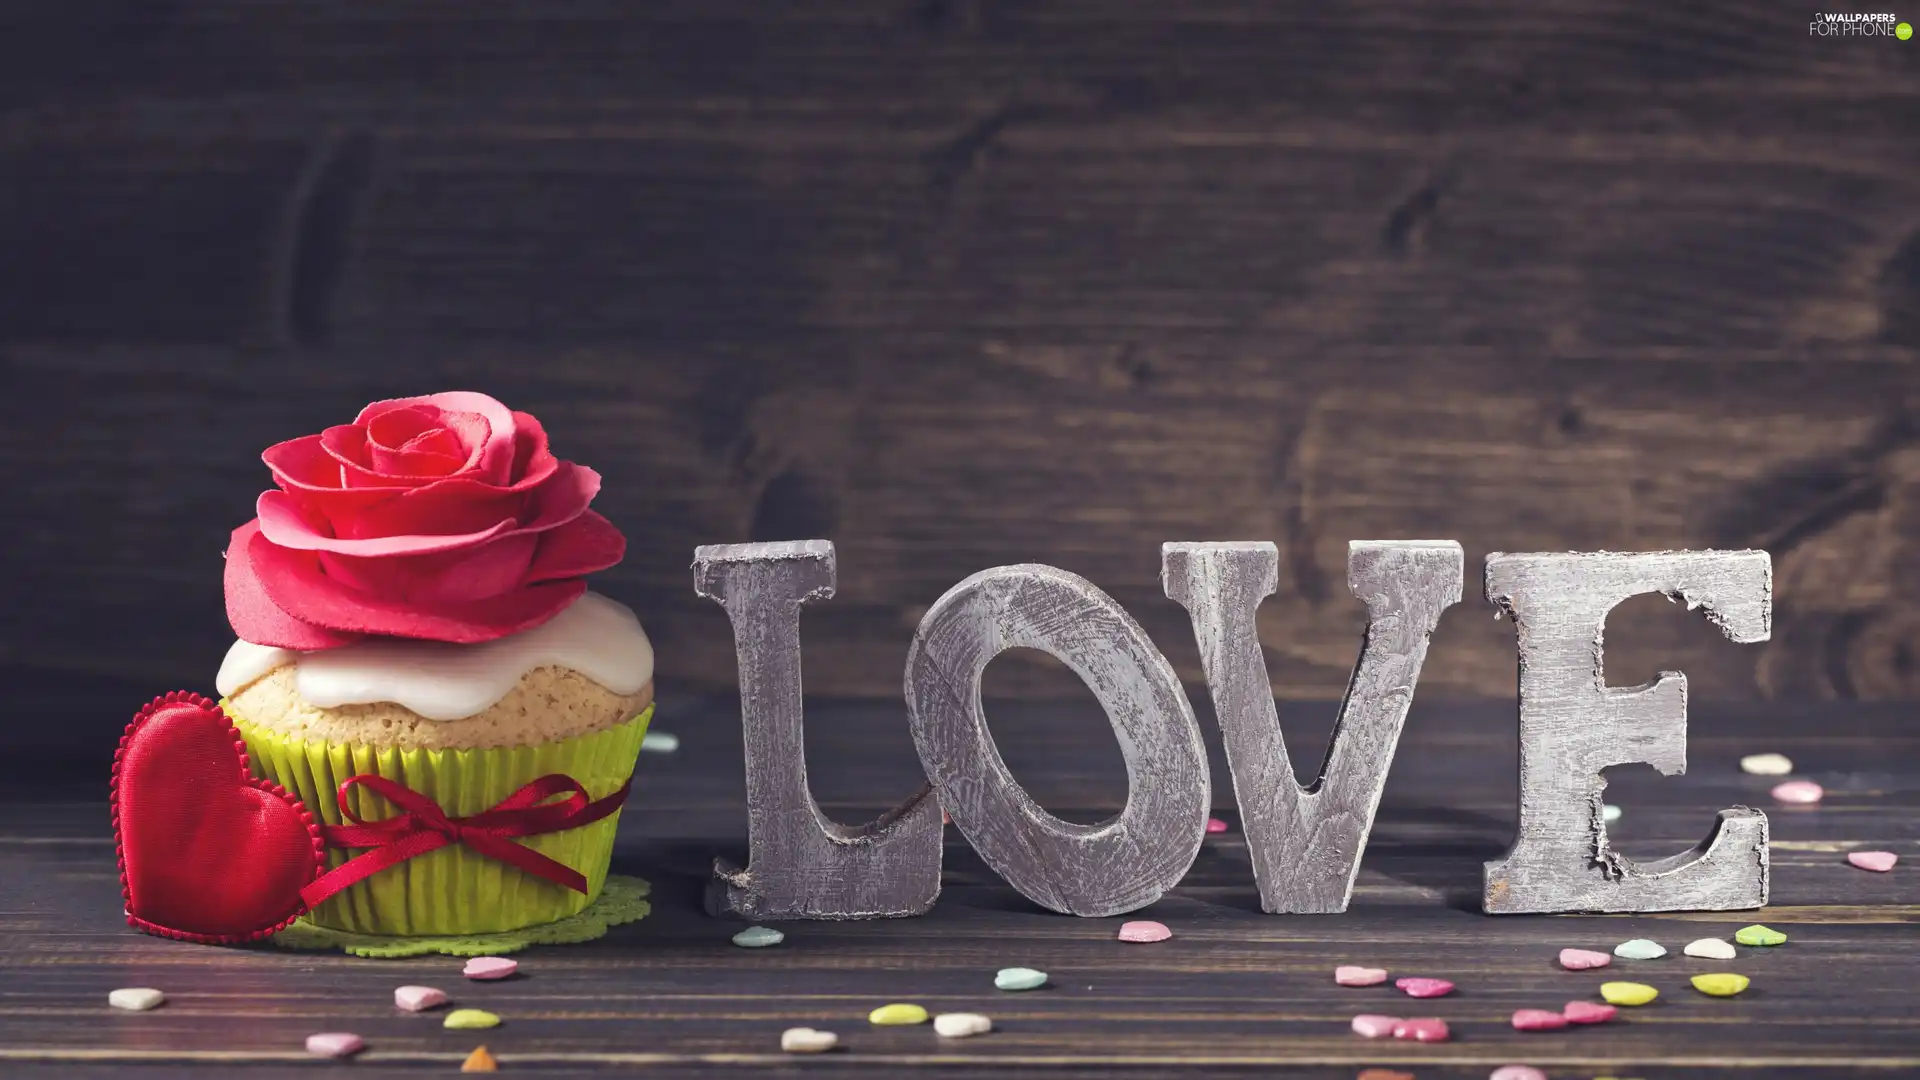 LOVE, wood, letters, Heart teddybear, cake, Valentine